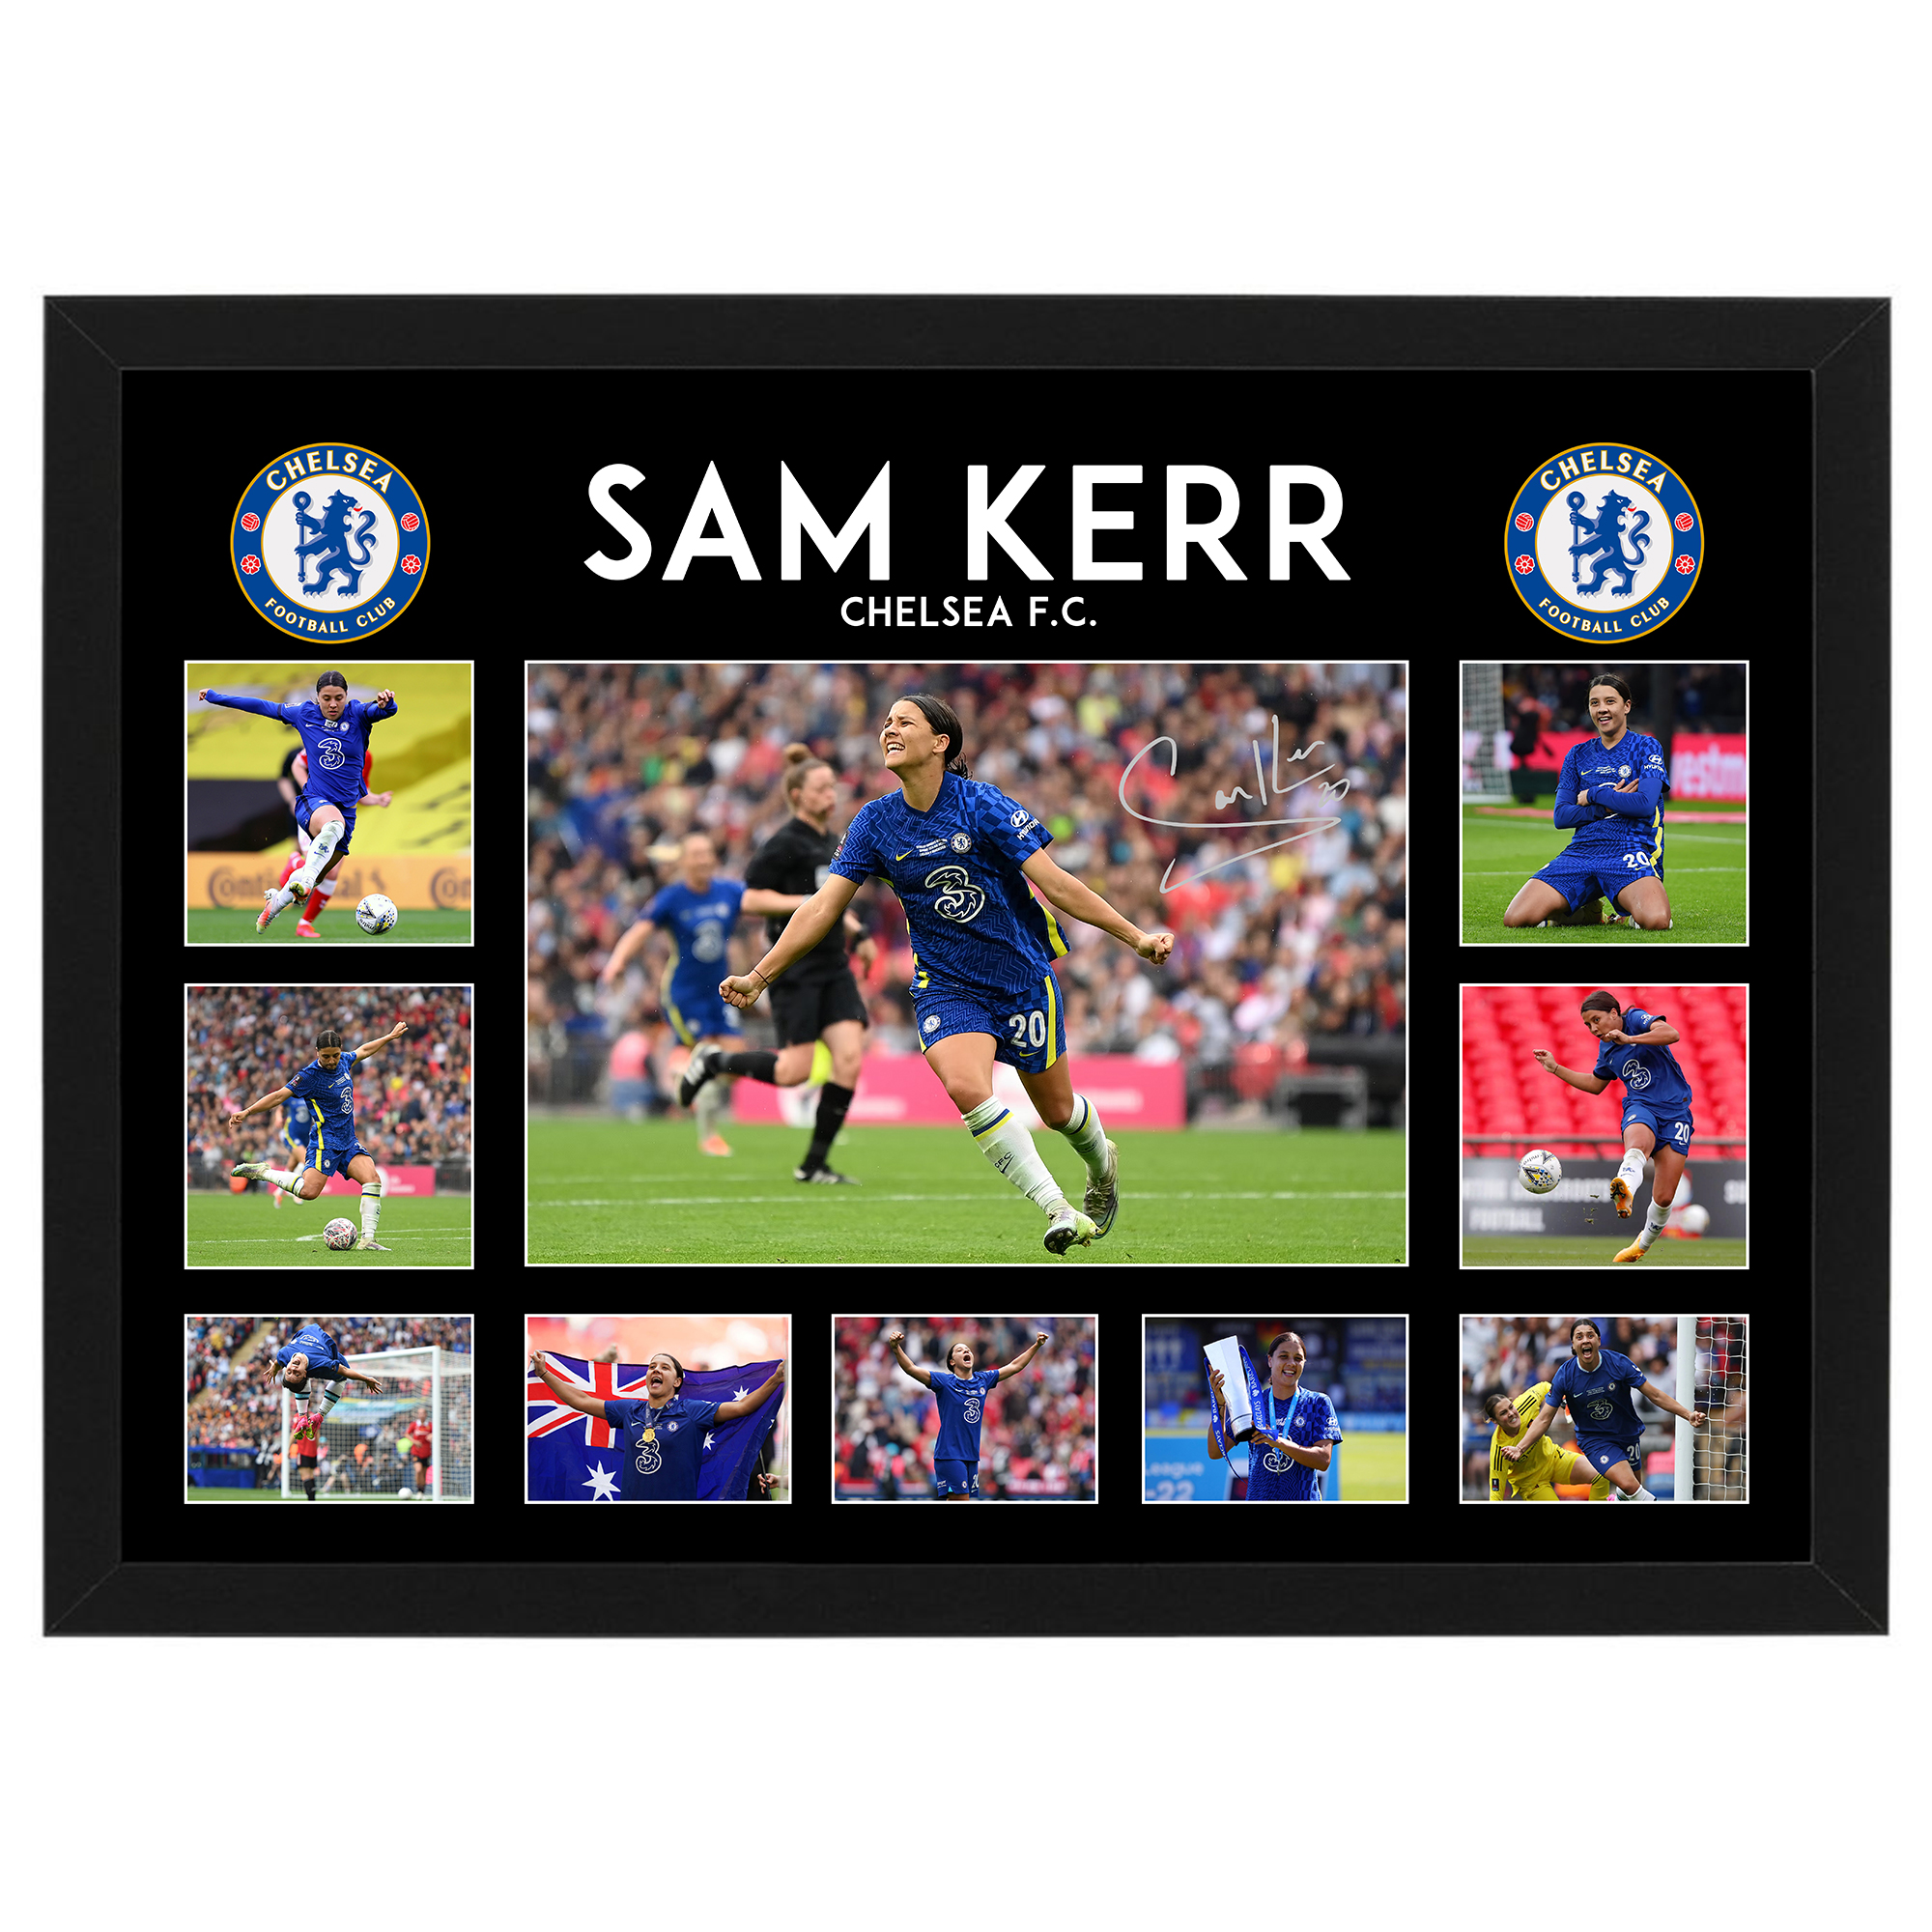 Soccer – Sam Kerr Chelsea Framed Large Photo Collage